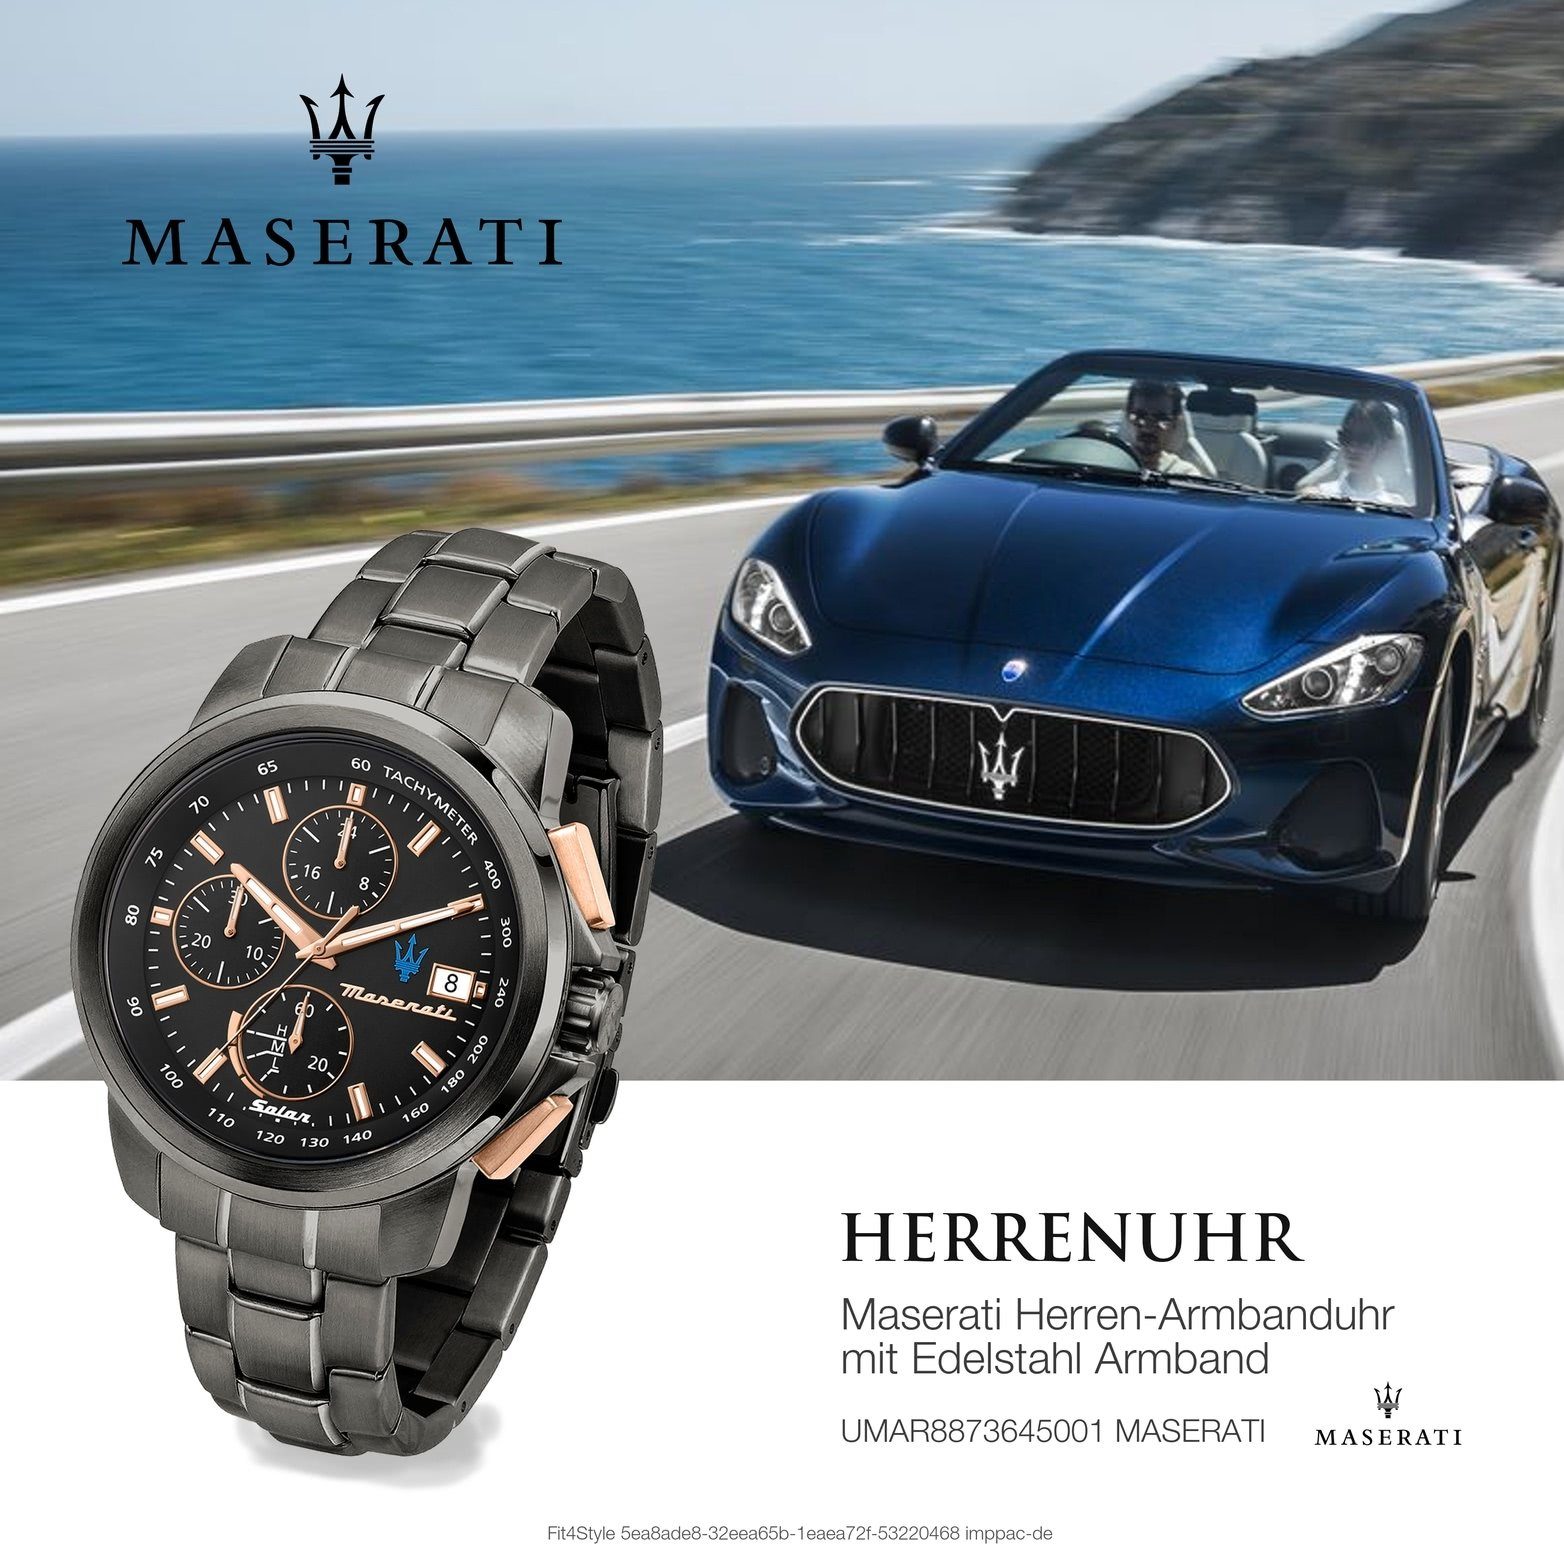 Edelstahlarmband, schwarz Chronograph, (ca. rundes Maserati 44mm) groß MASERATI Gehäuse, Edelstahluhr Herrenuhr Chronograph